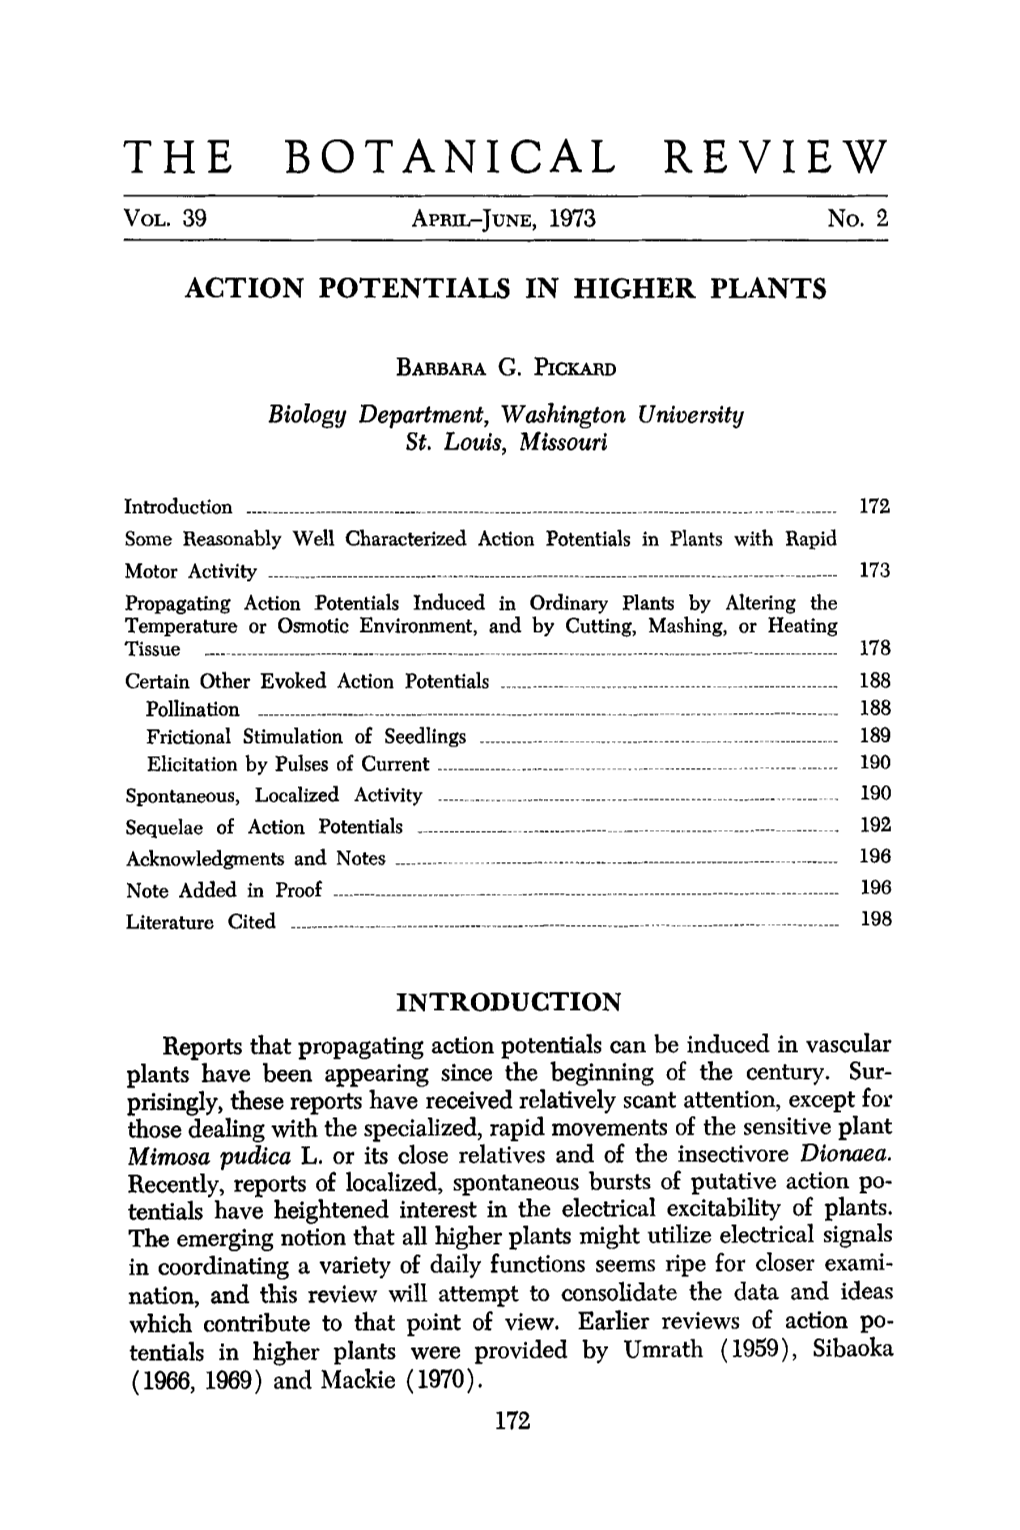 Action Potentials in Higher Plants